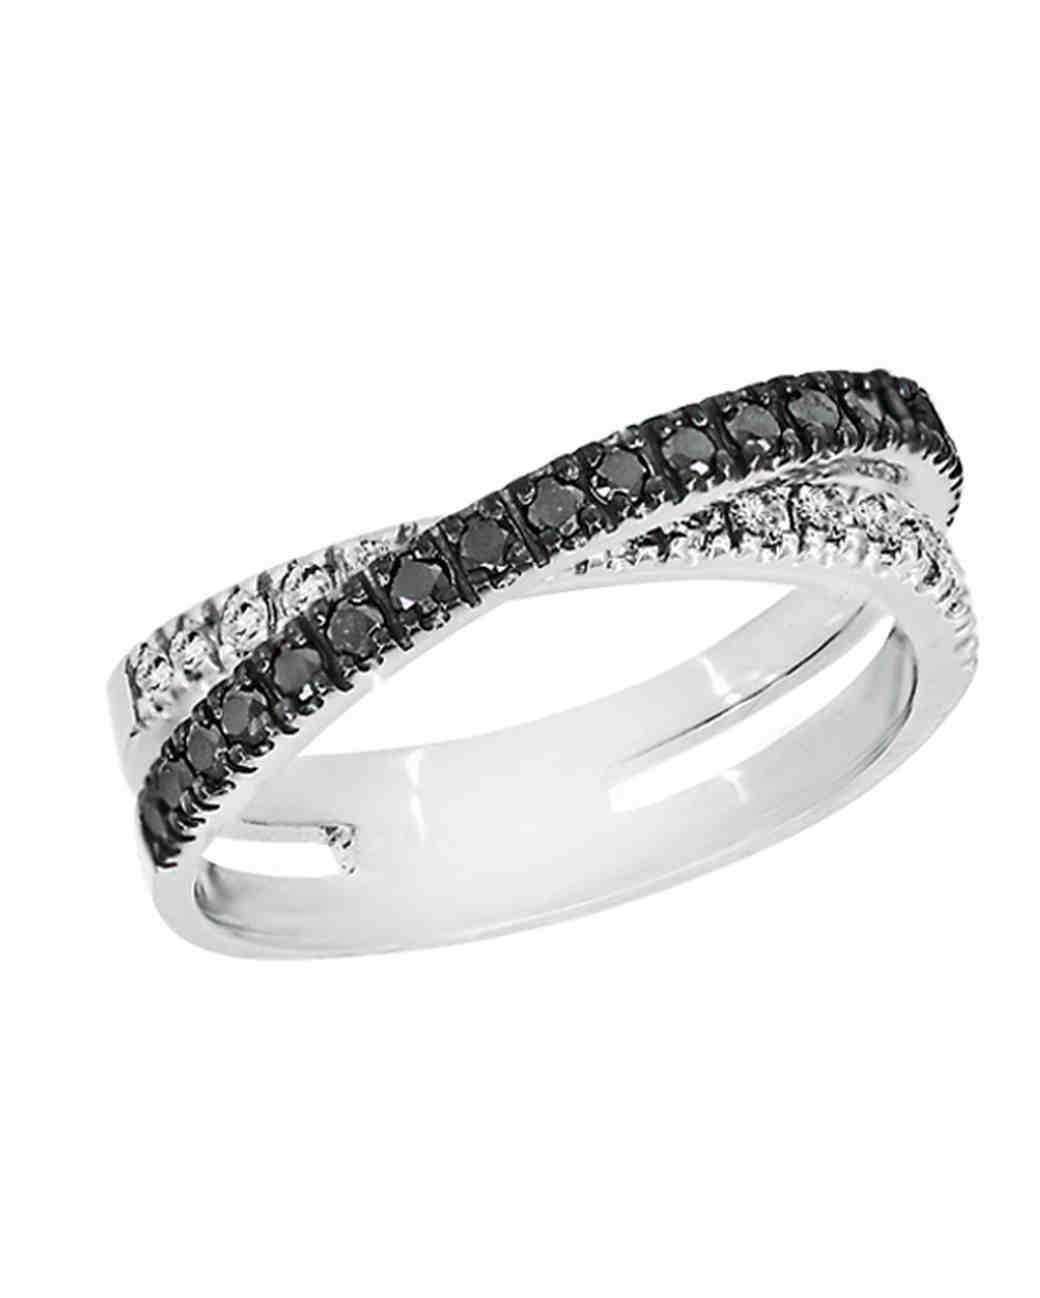 Black Diamond Wedding Band
 The New LBD The Little Black Diamond Engagement Ring